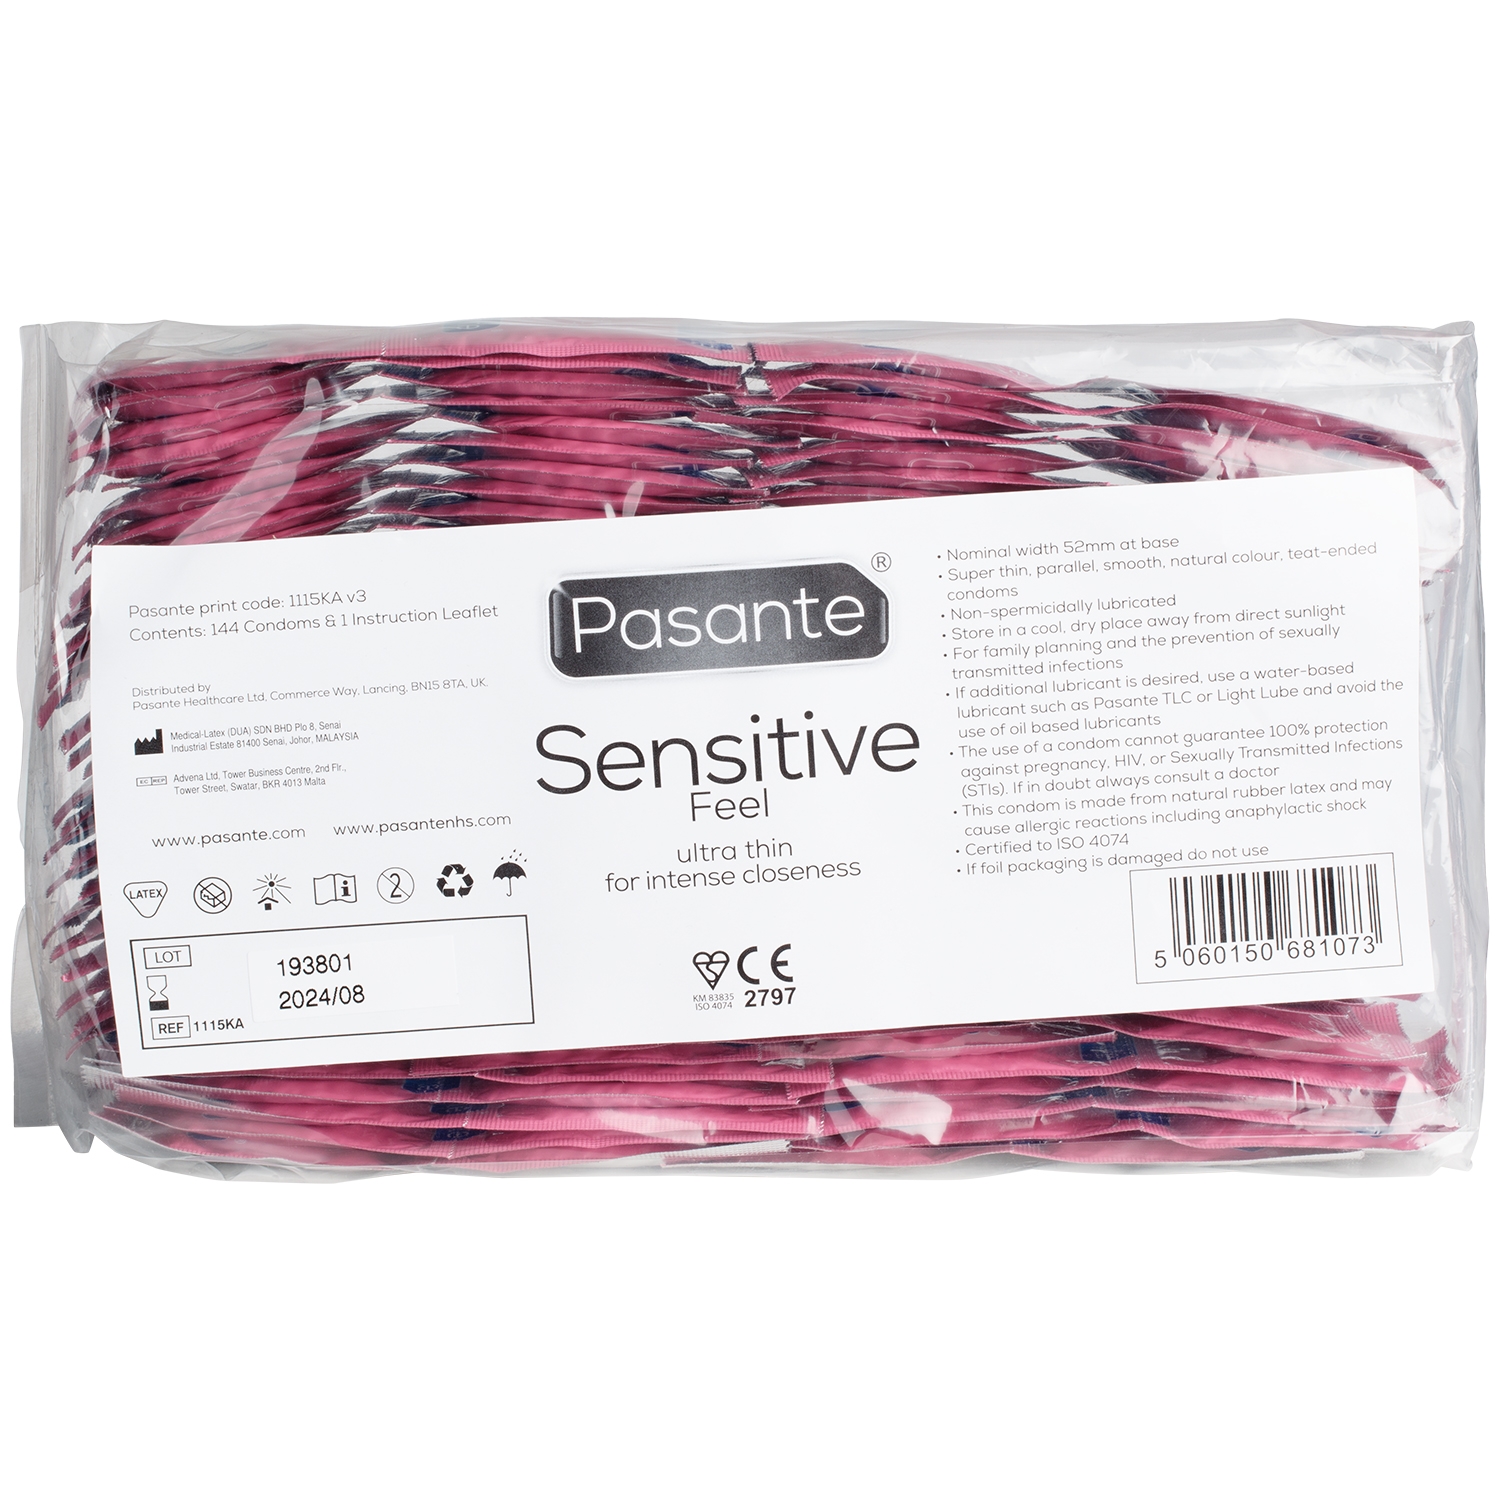 Pasante Sensitive Feel Ultra Thin Kondomer 144 st - Klar